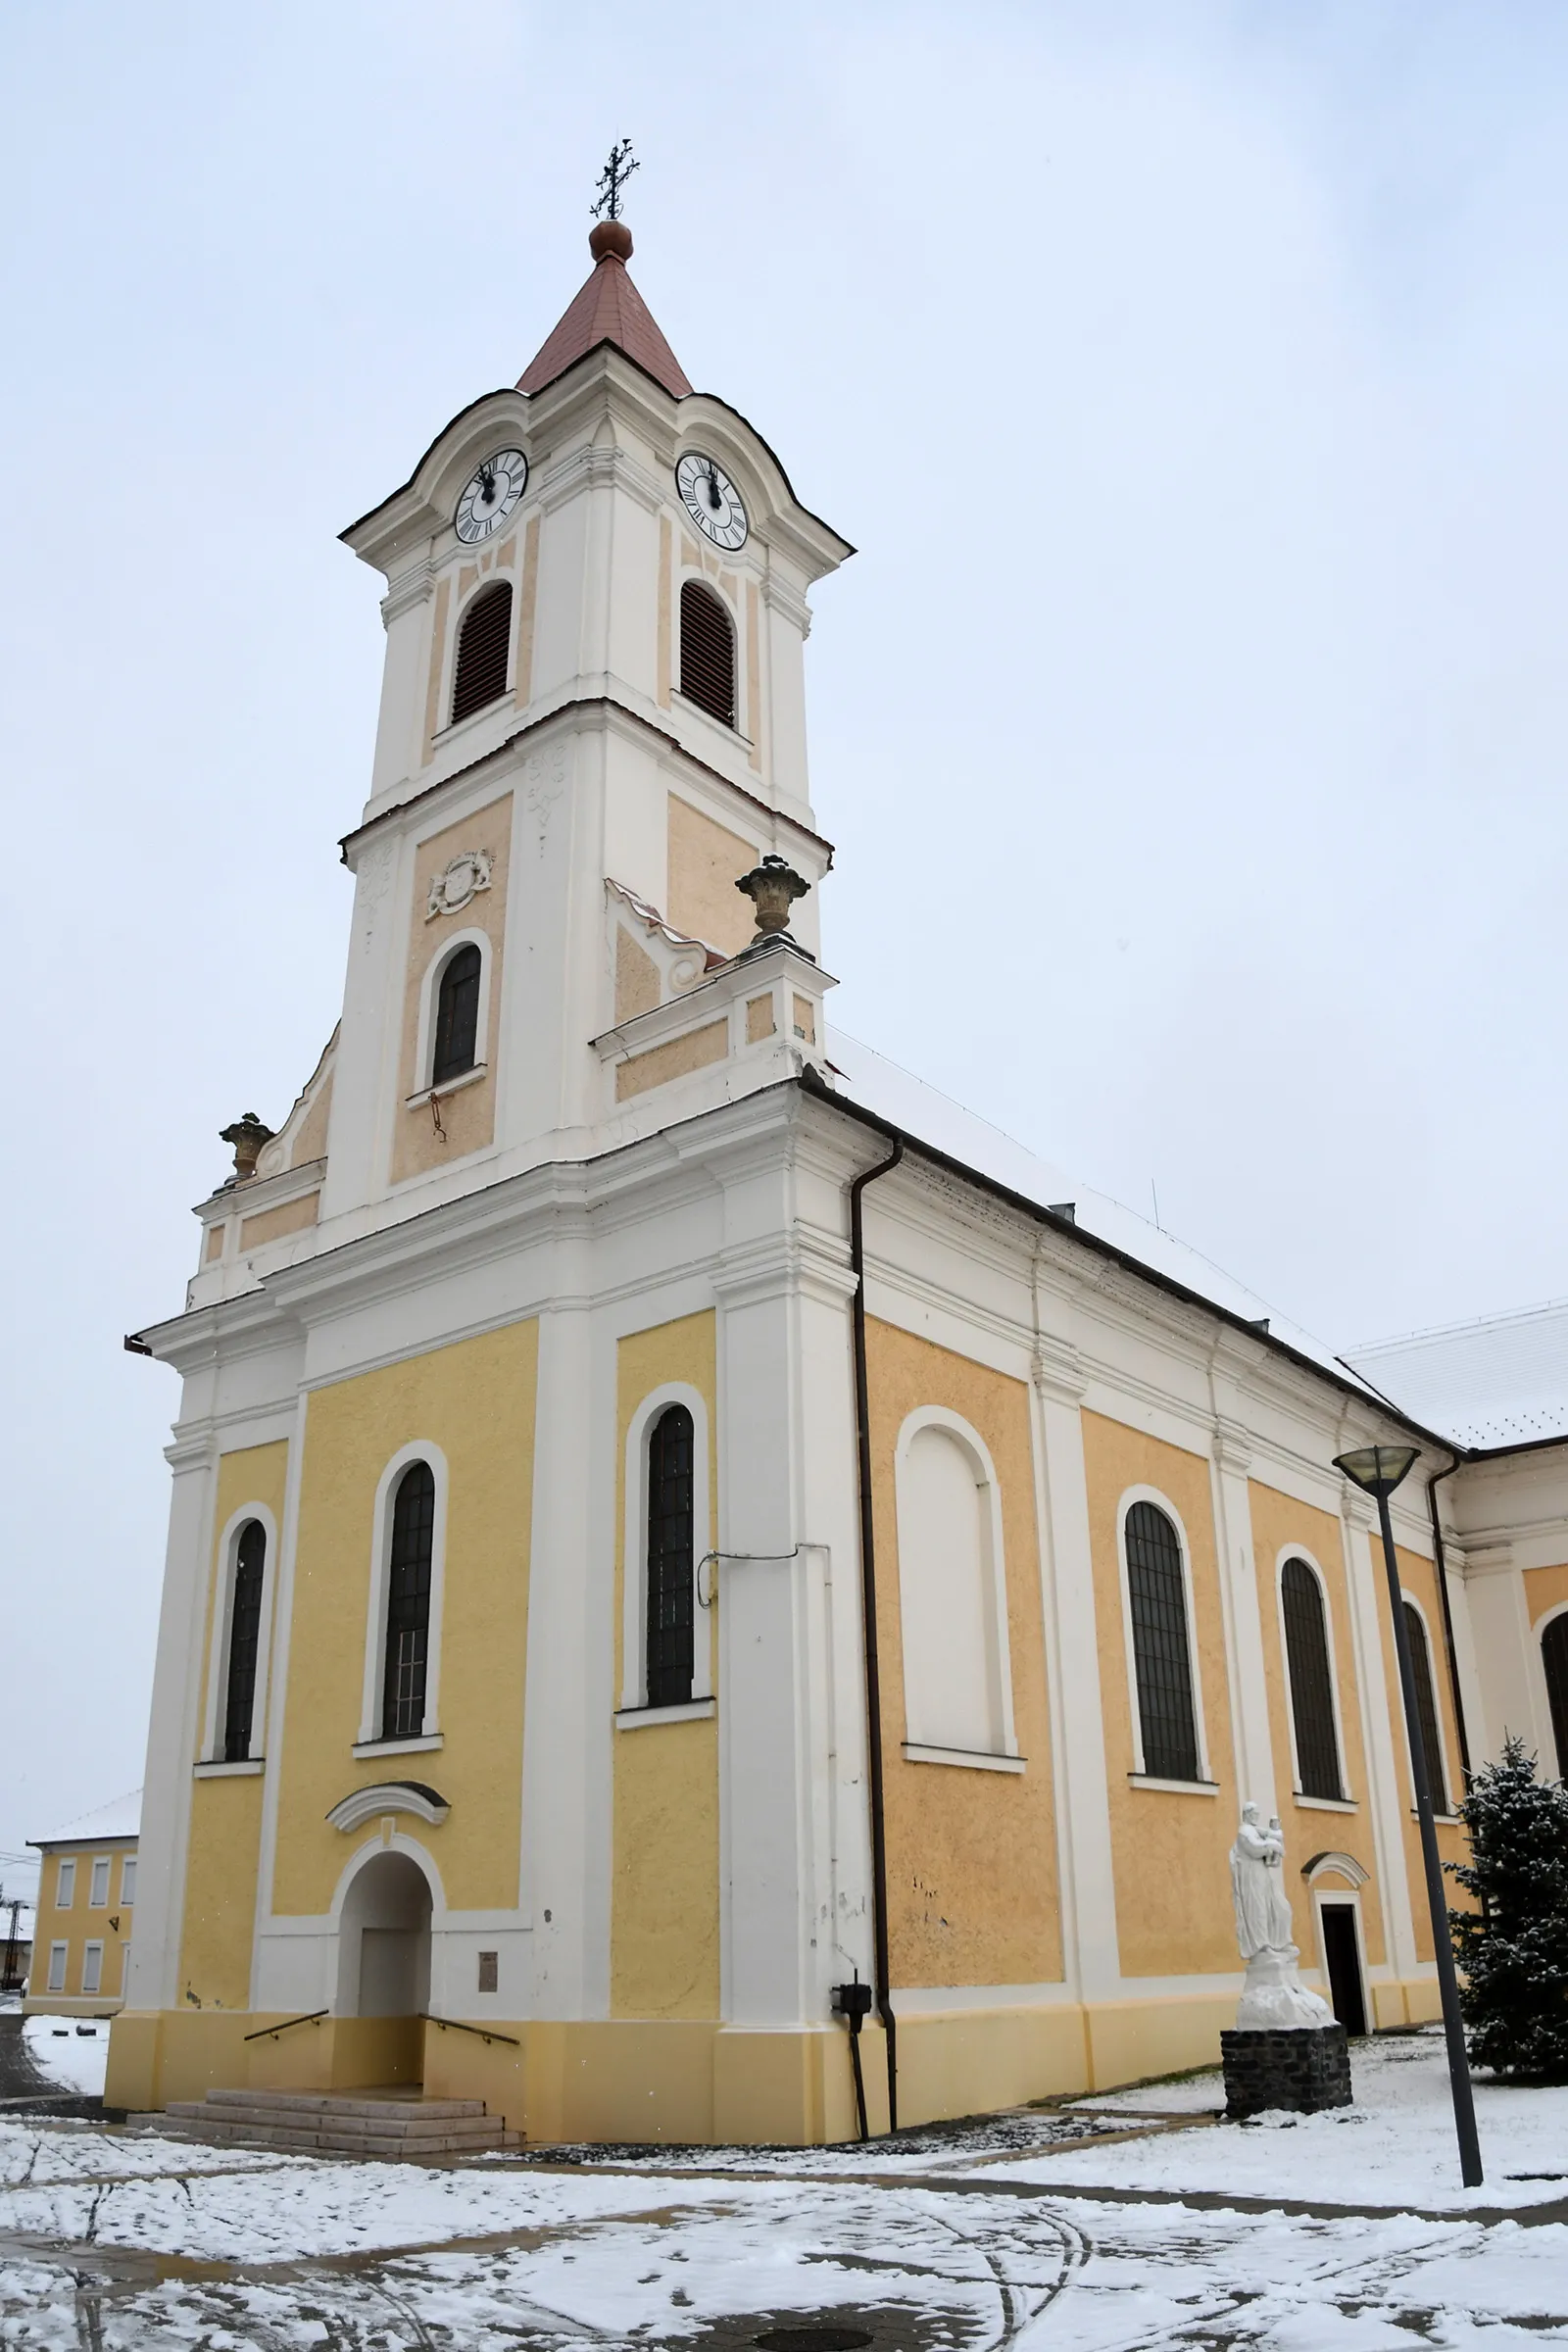 Photo showing: Roman Catholic church in Zalaszentgrót, Hungary